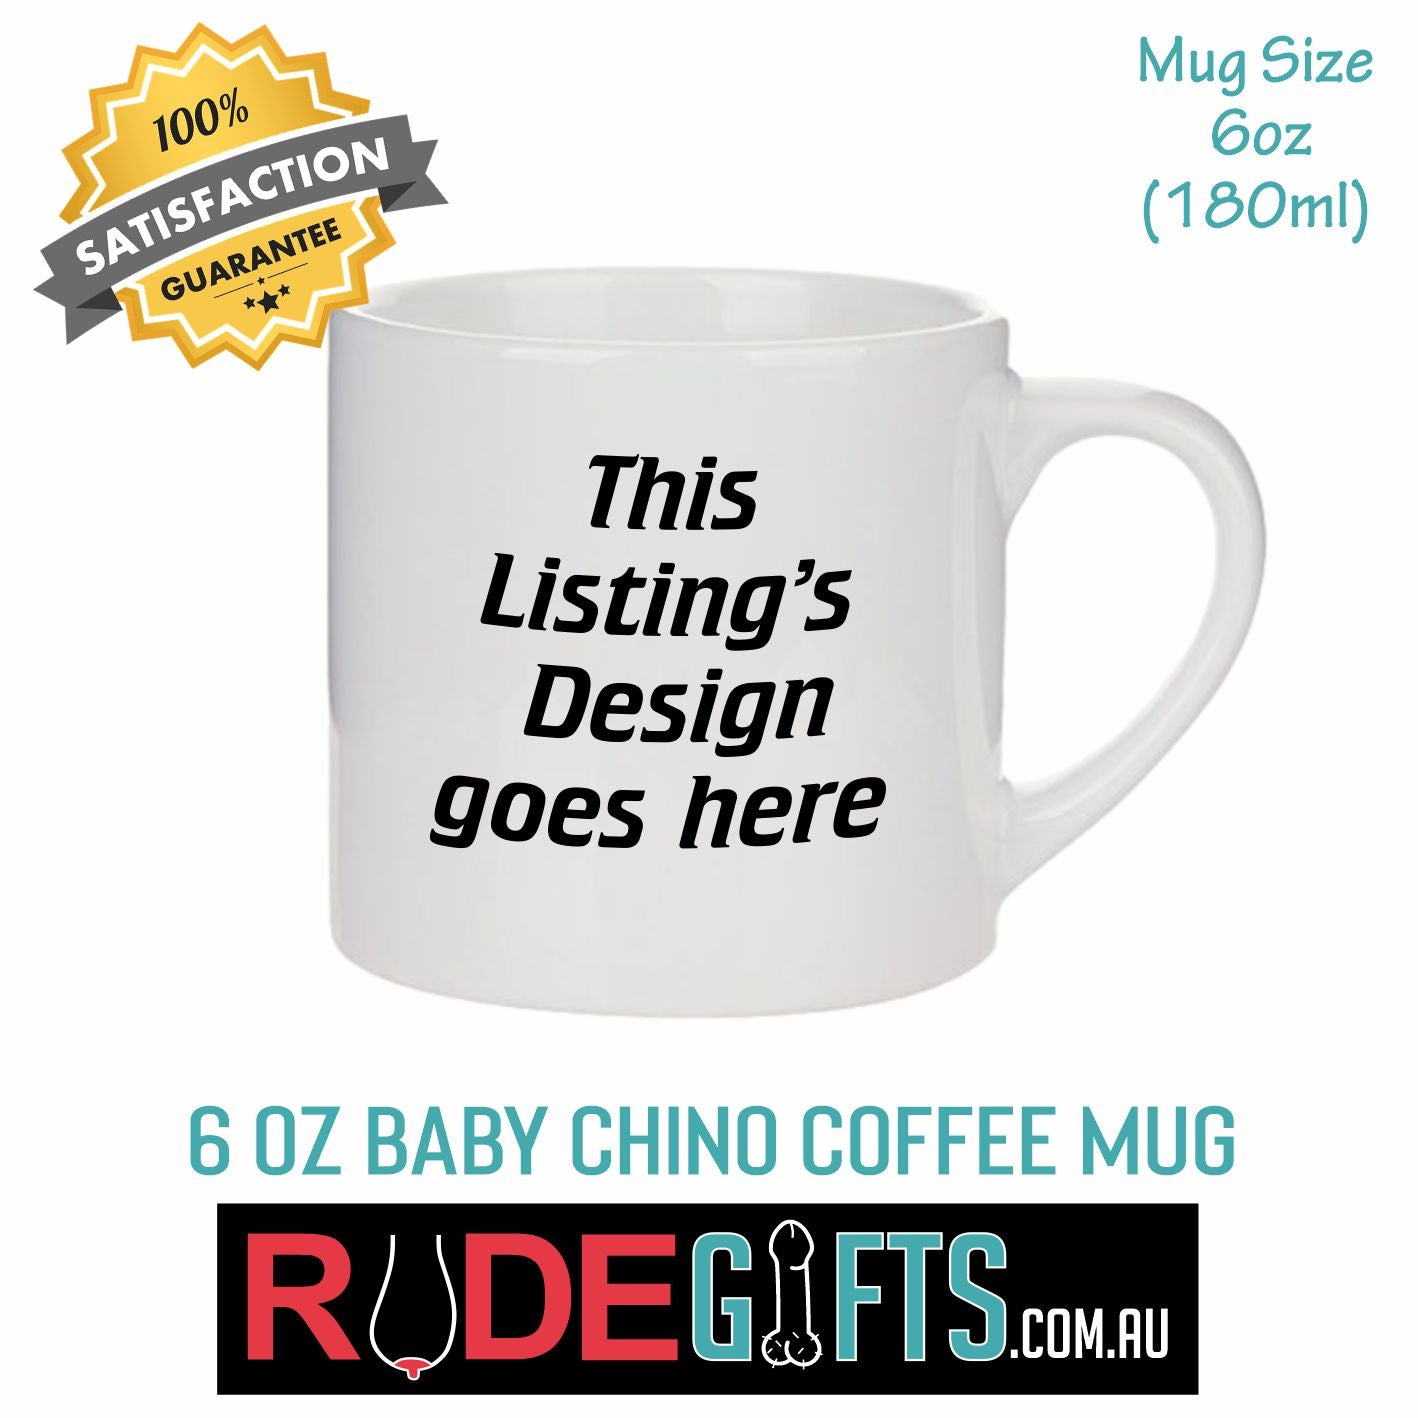 Fuck Off I Mean Good Morning  Cunt Coffee Mug